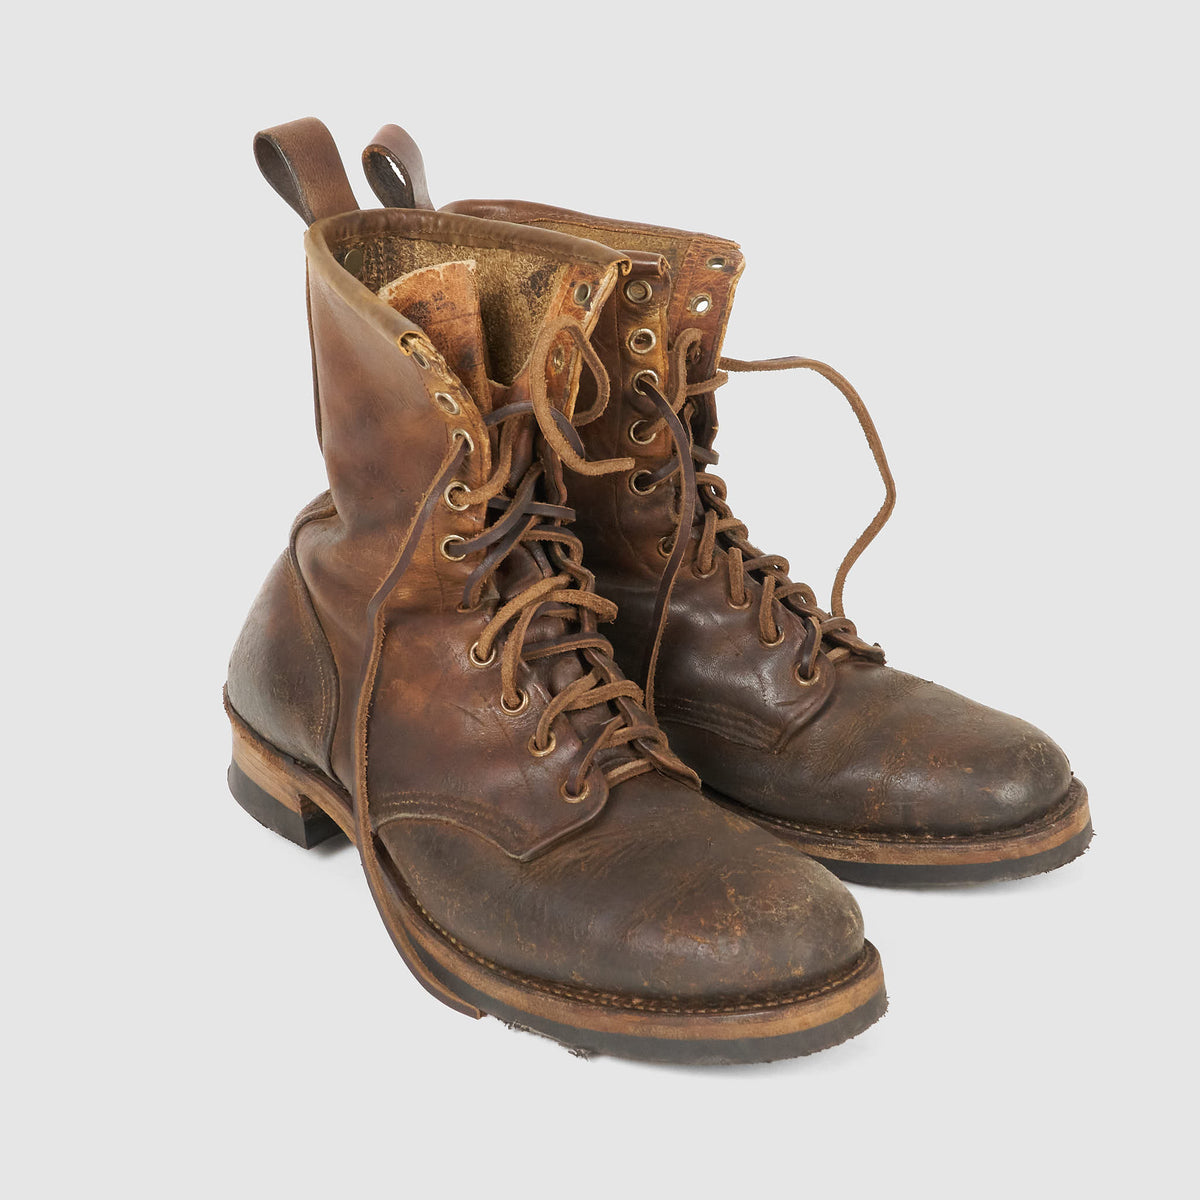 Irregular x DeeCee Style Vintage Military Boots